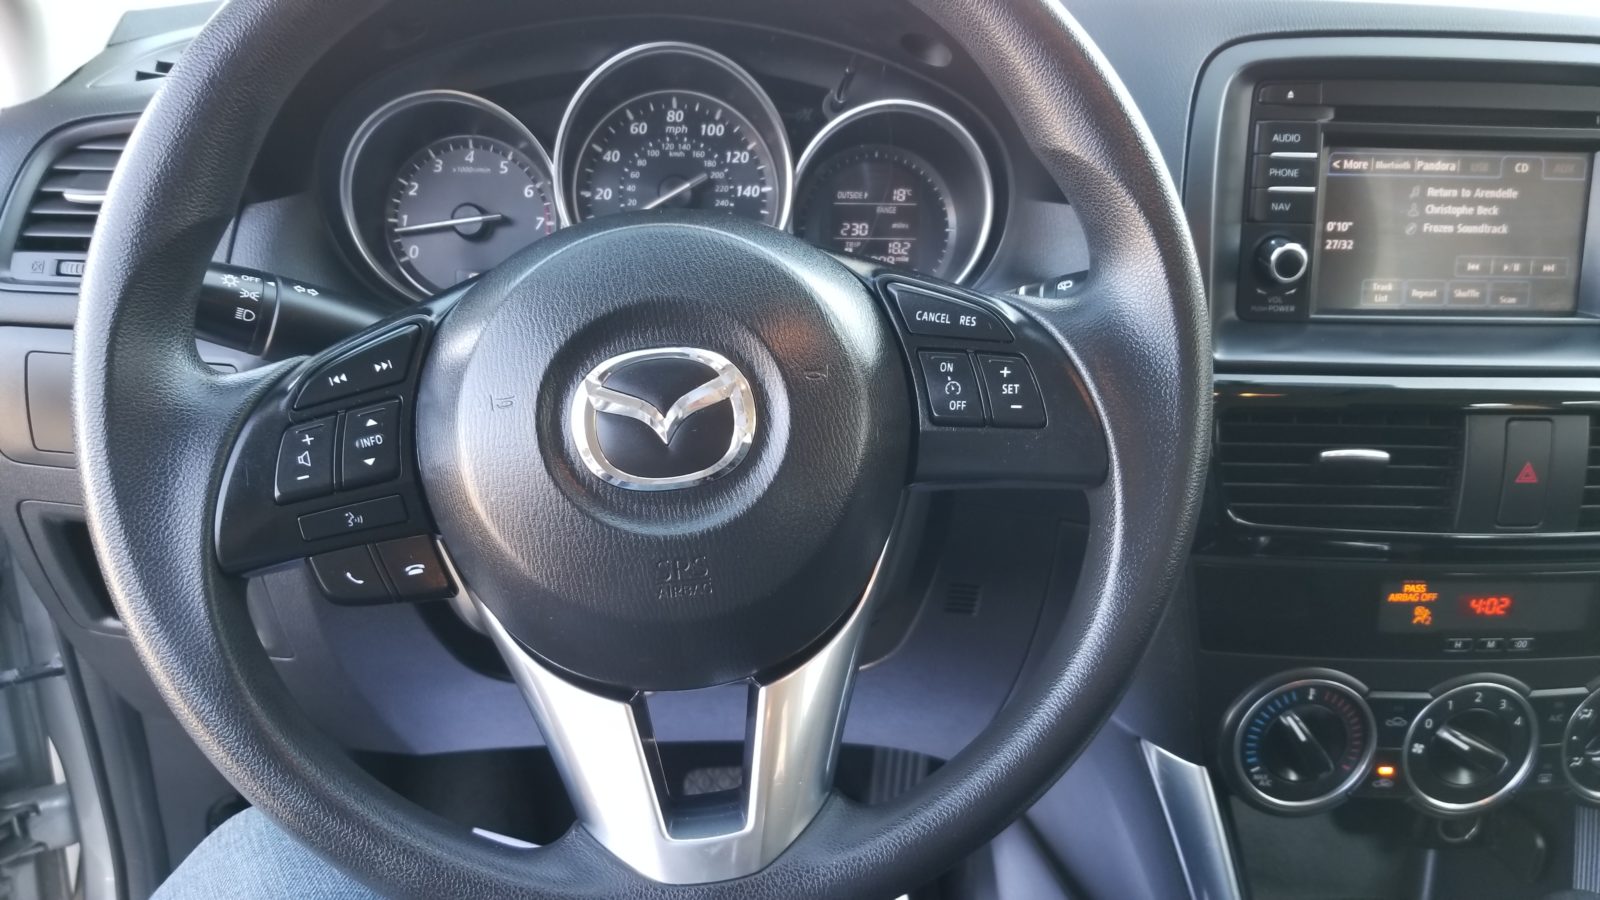 2015 Mazda CX-5 Sport